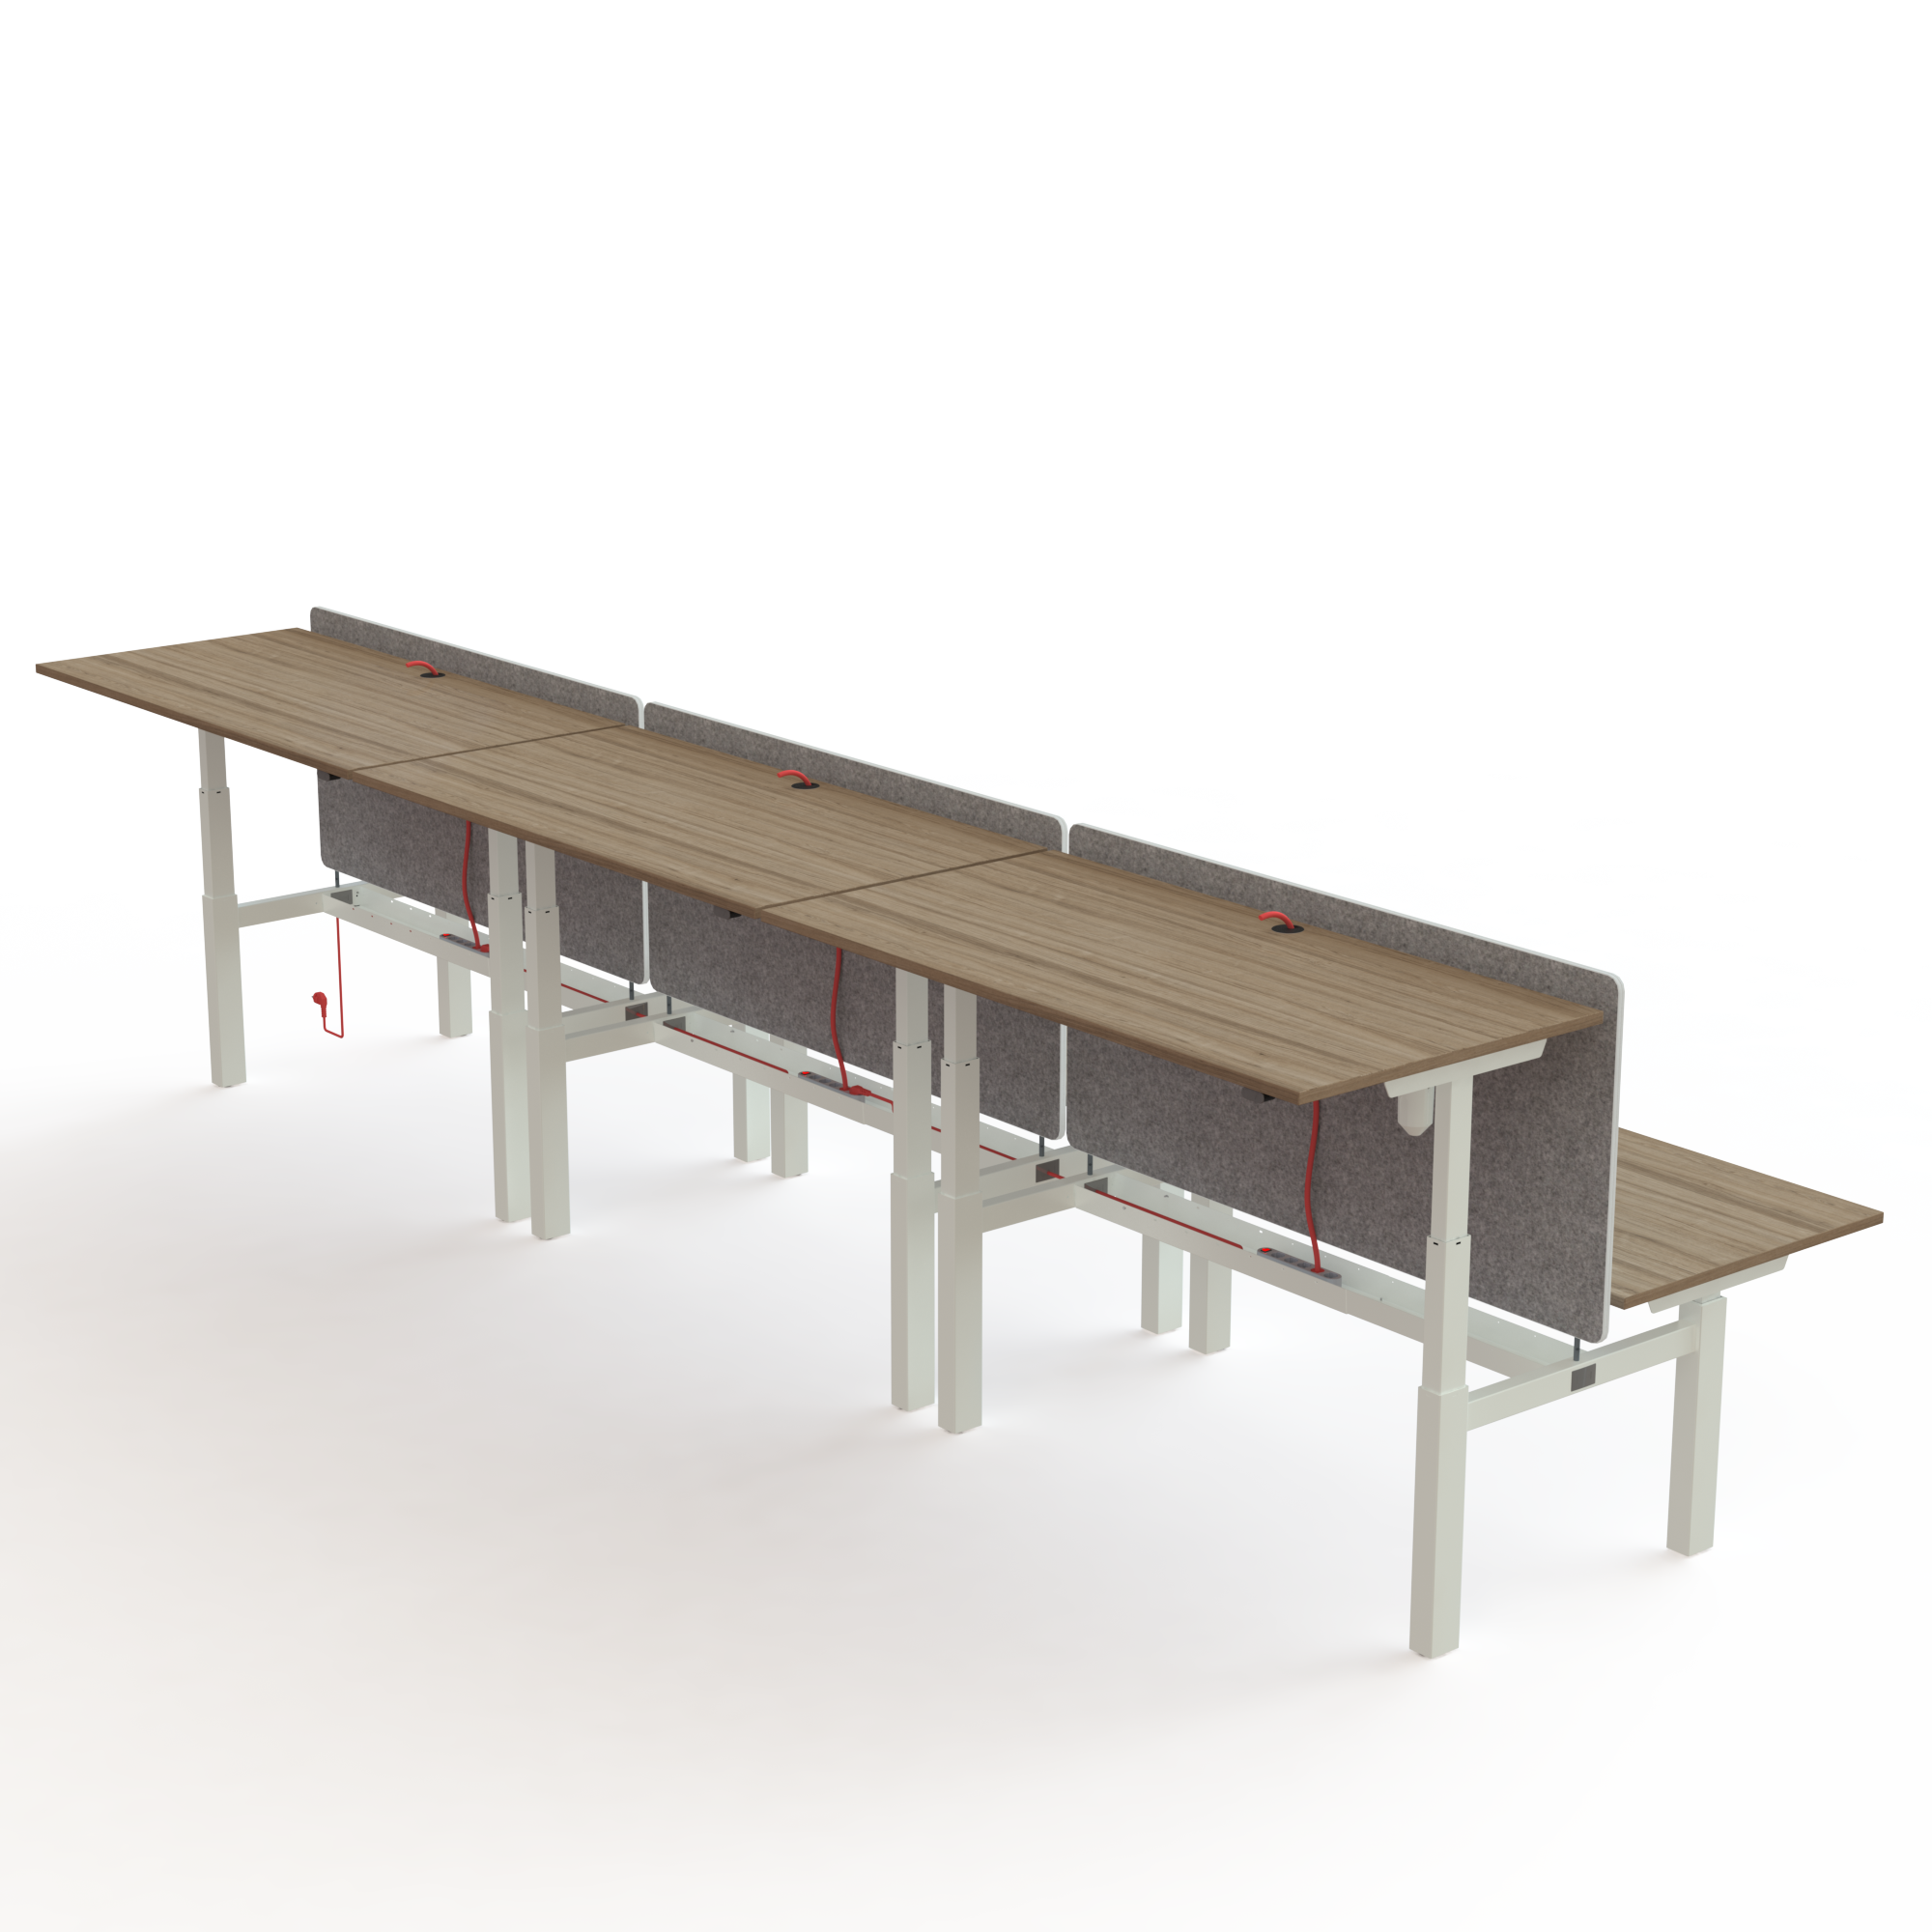 Electric Adjustable Desk | 120x80 cm | Walnut with white frame